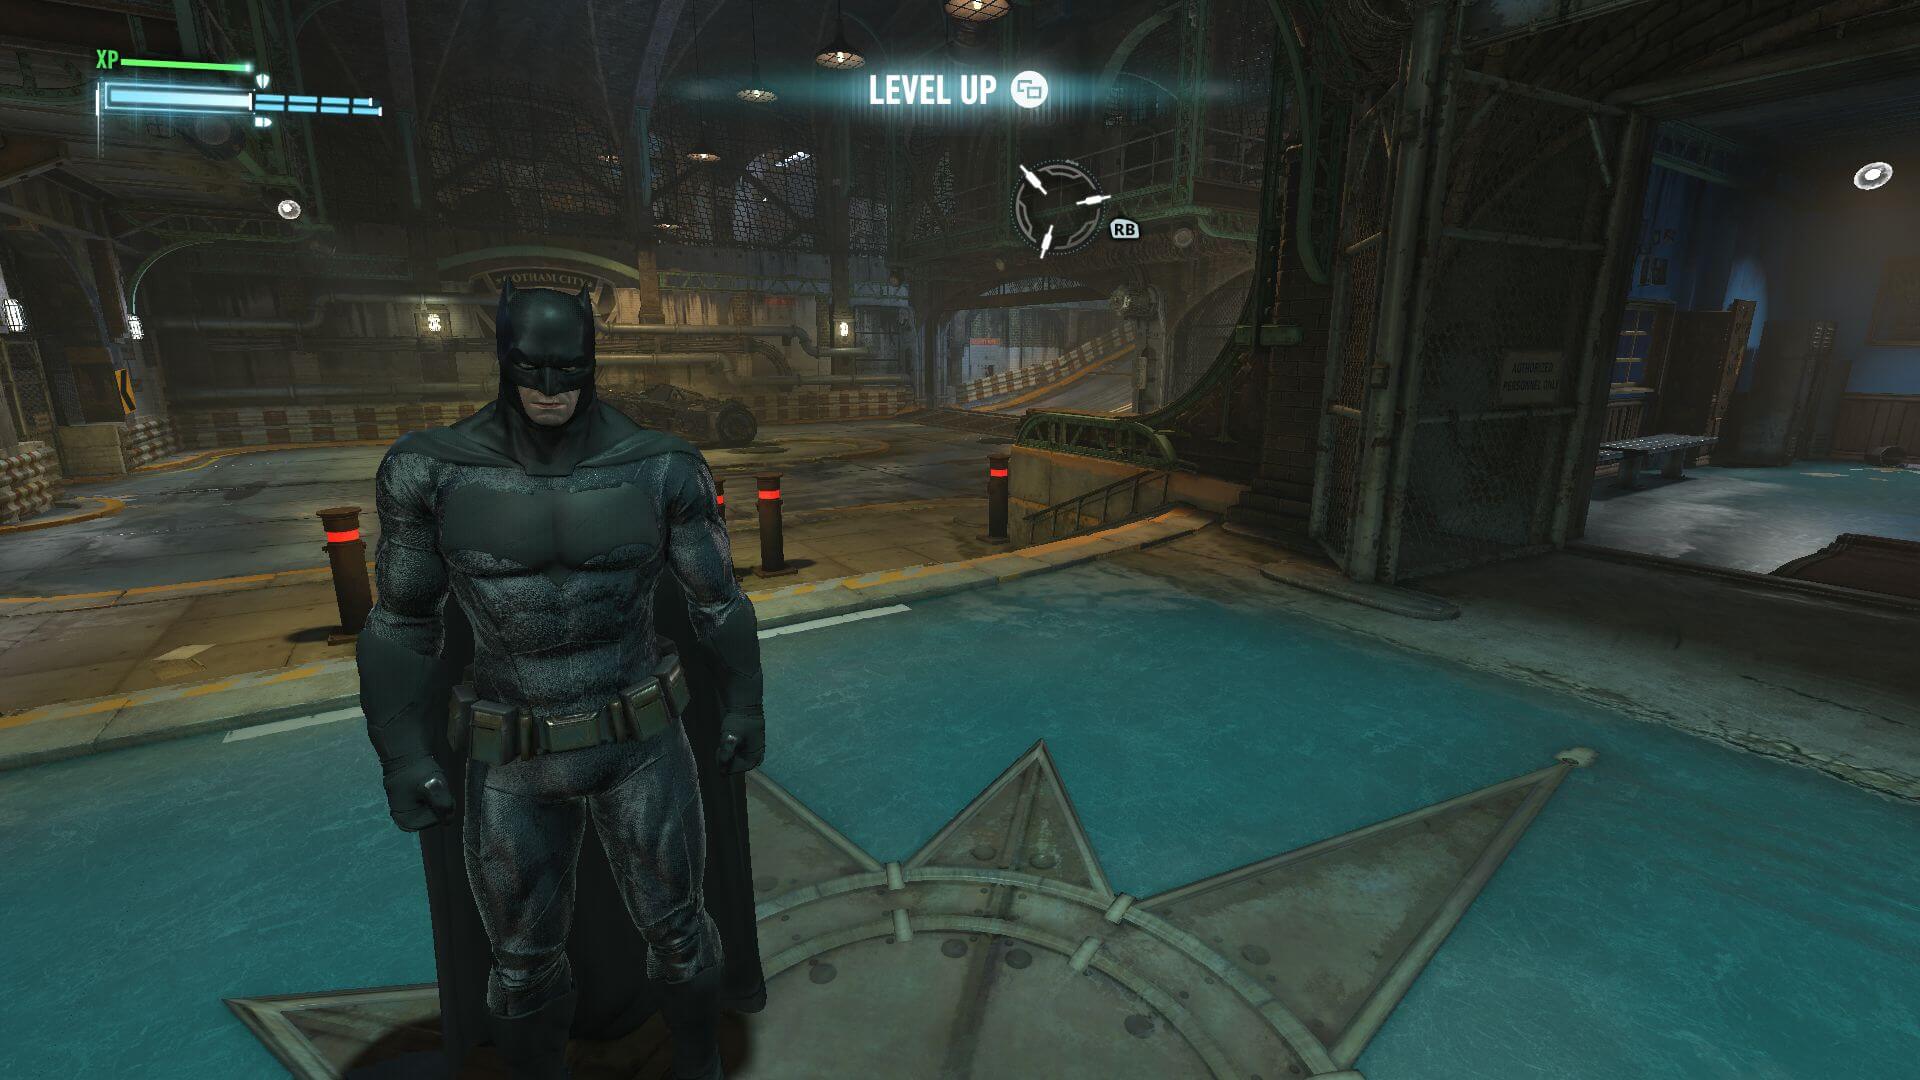 Nexus batman. Batman Arkham Origins земля 2. Batman: Arkham Origins улучшение графики [Artsate]. Batman Arkham Knight мод на ВАЗ. Batman Arkham Knight мод на приору.